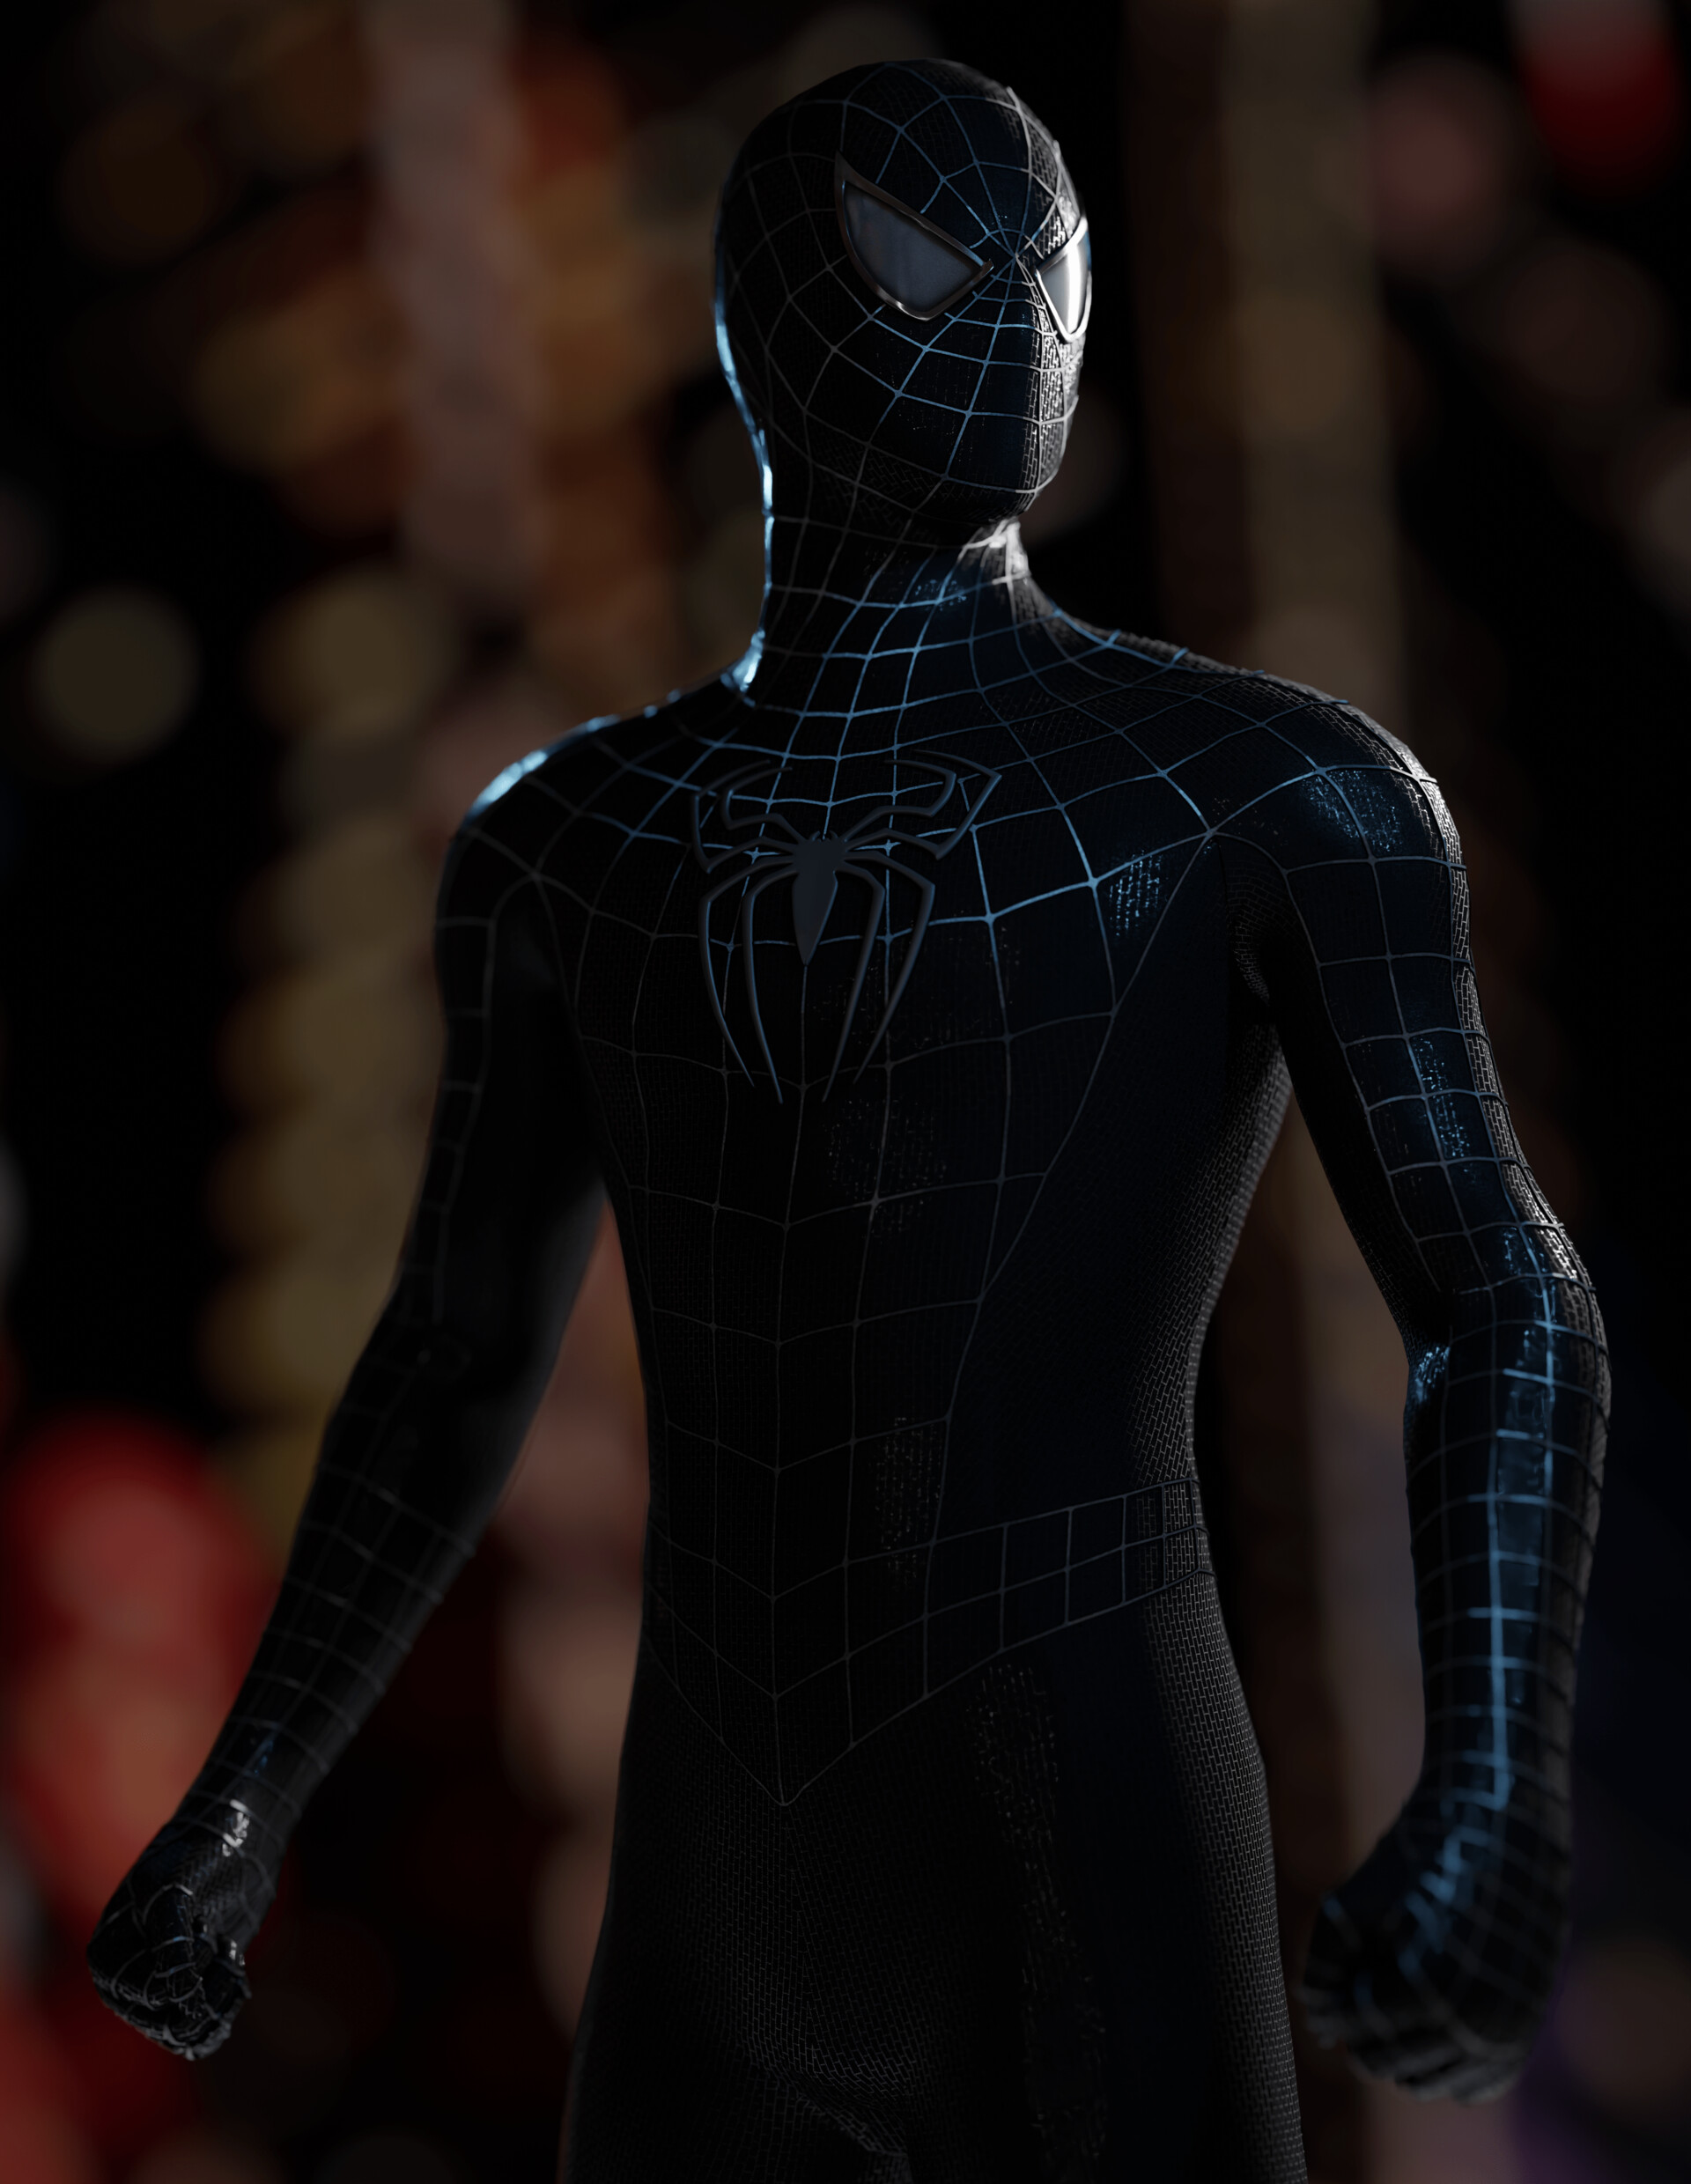 ArtStation - Spiderman 3 Black Suit